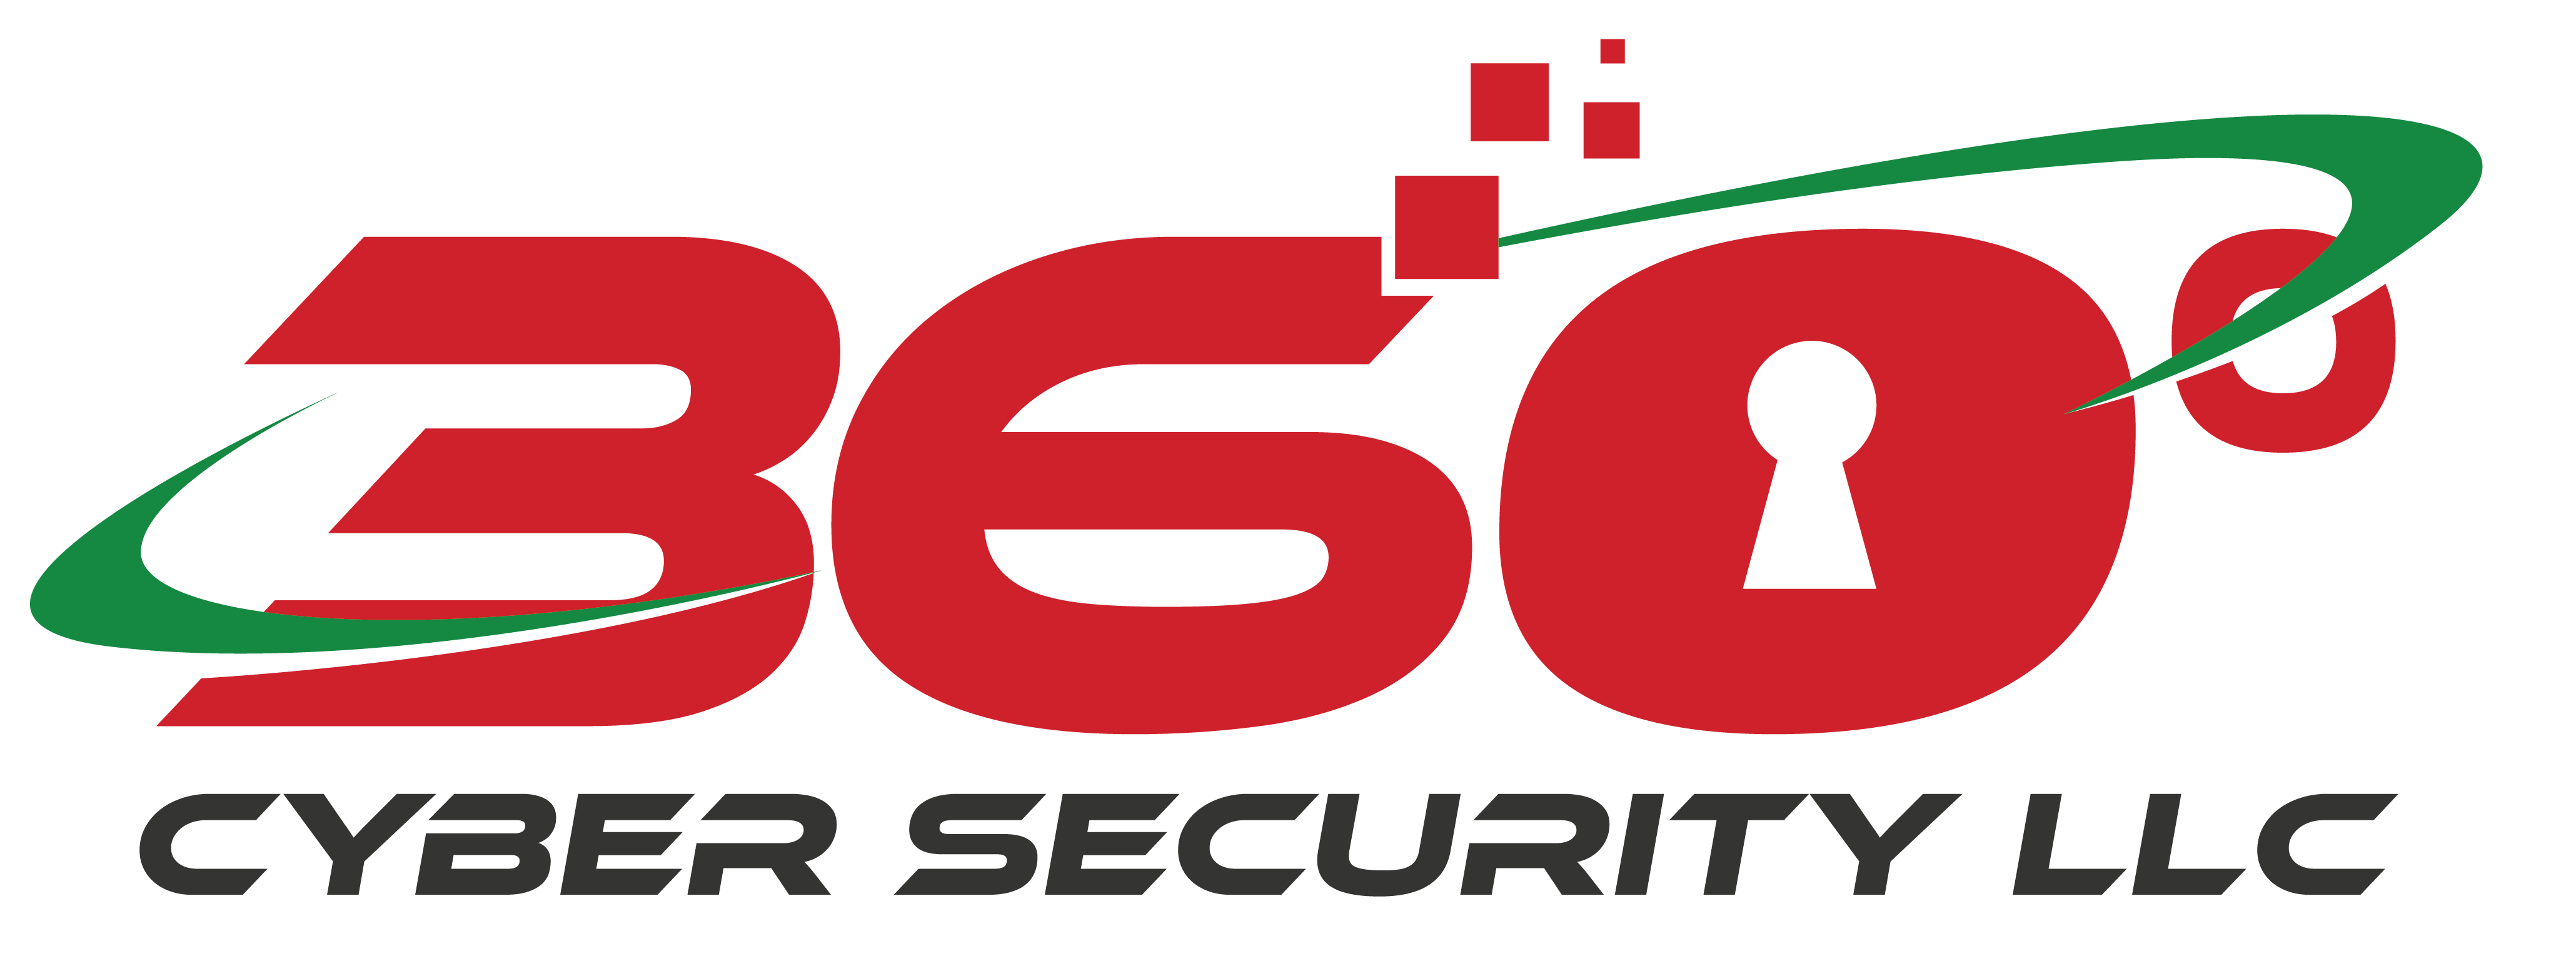 360 Degree Cyber Security LLC